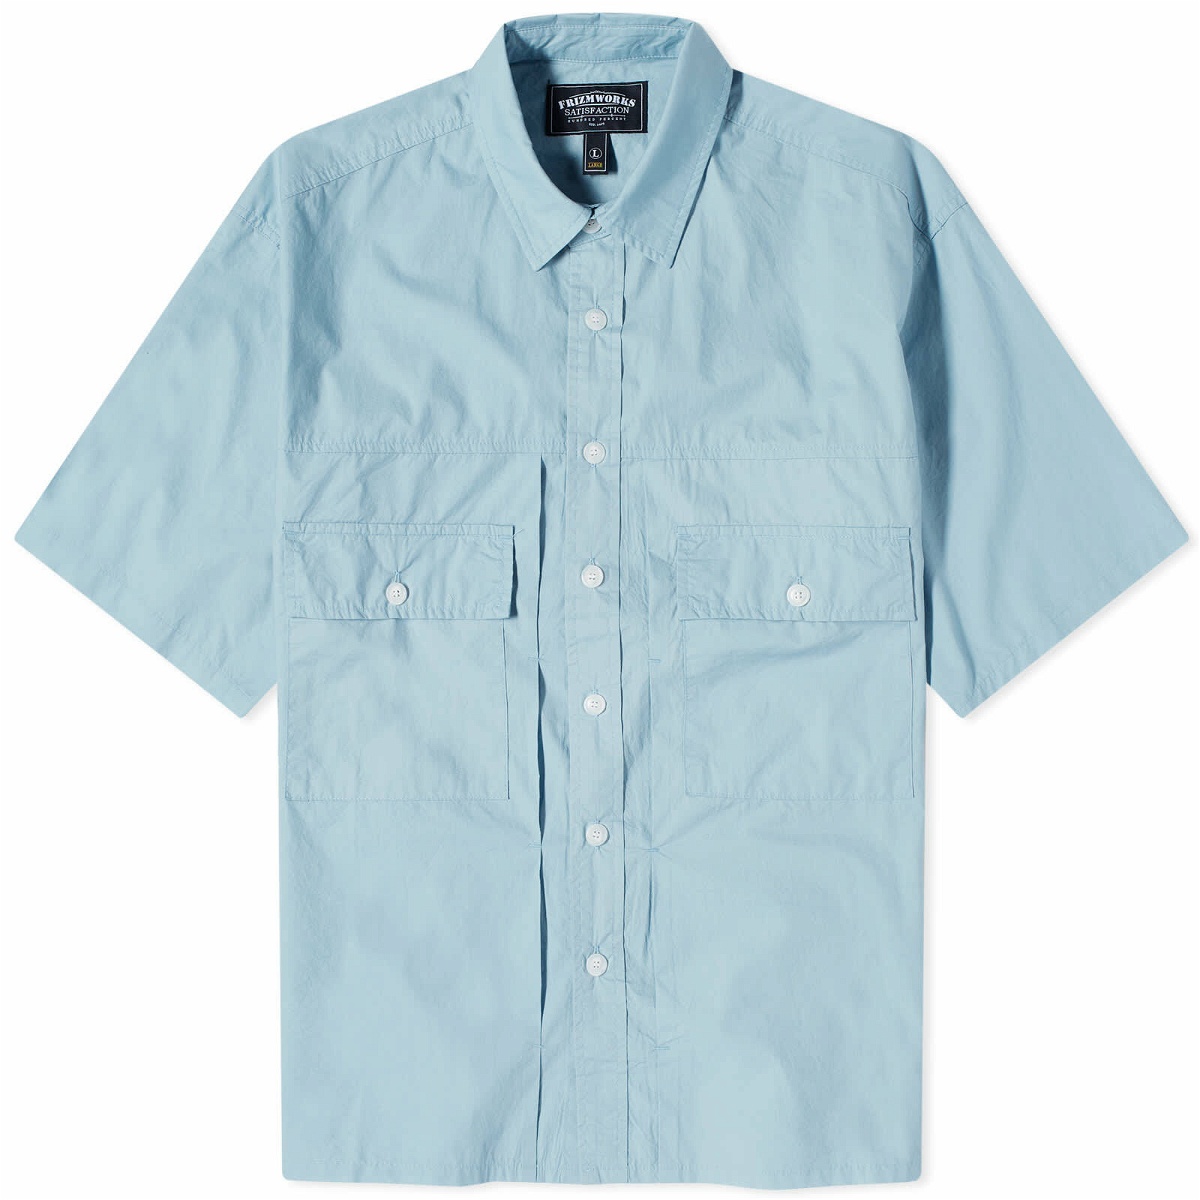 Photo: FrizmWORKS Men's Short Sleeve Trucker Shirt in Ash Blue